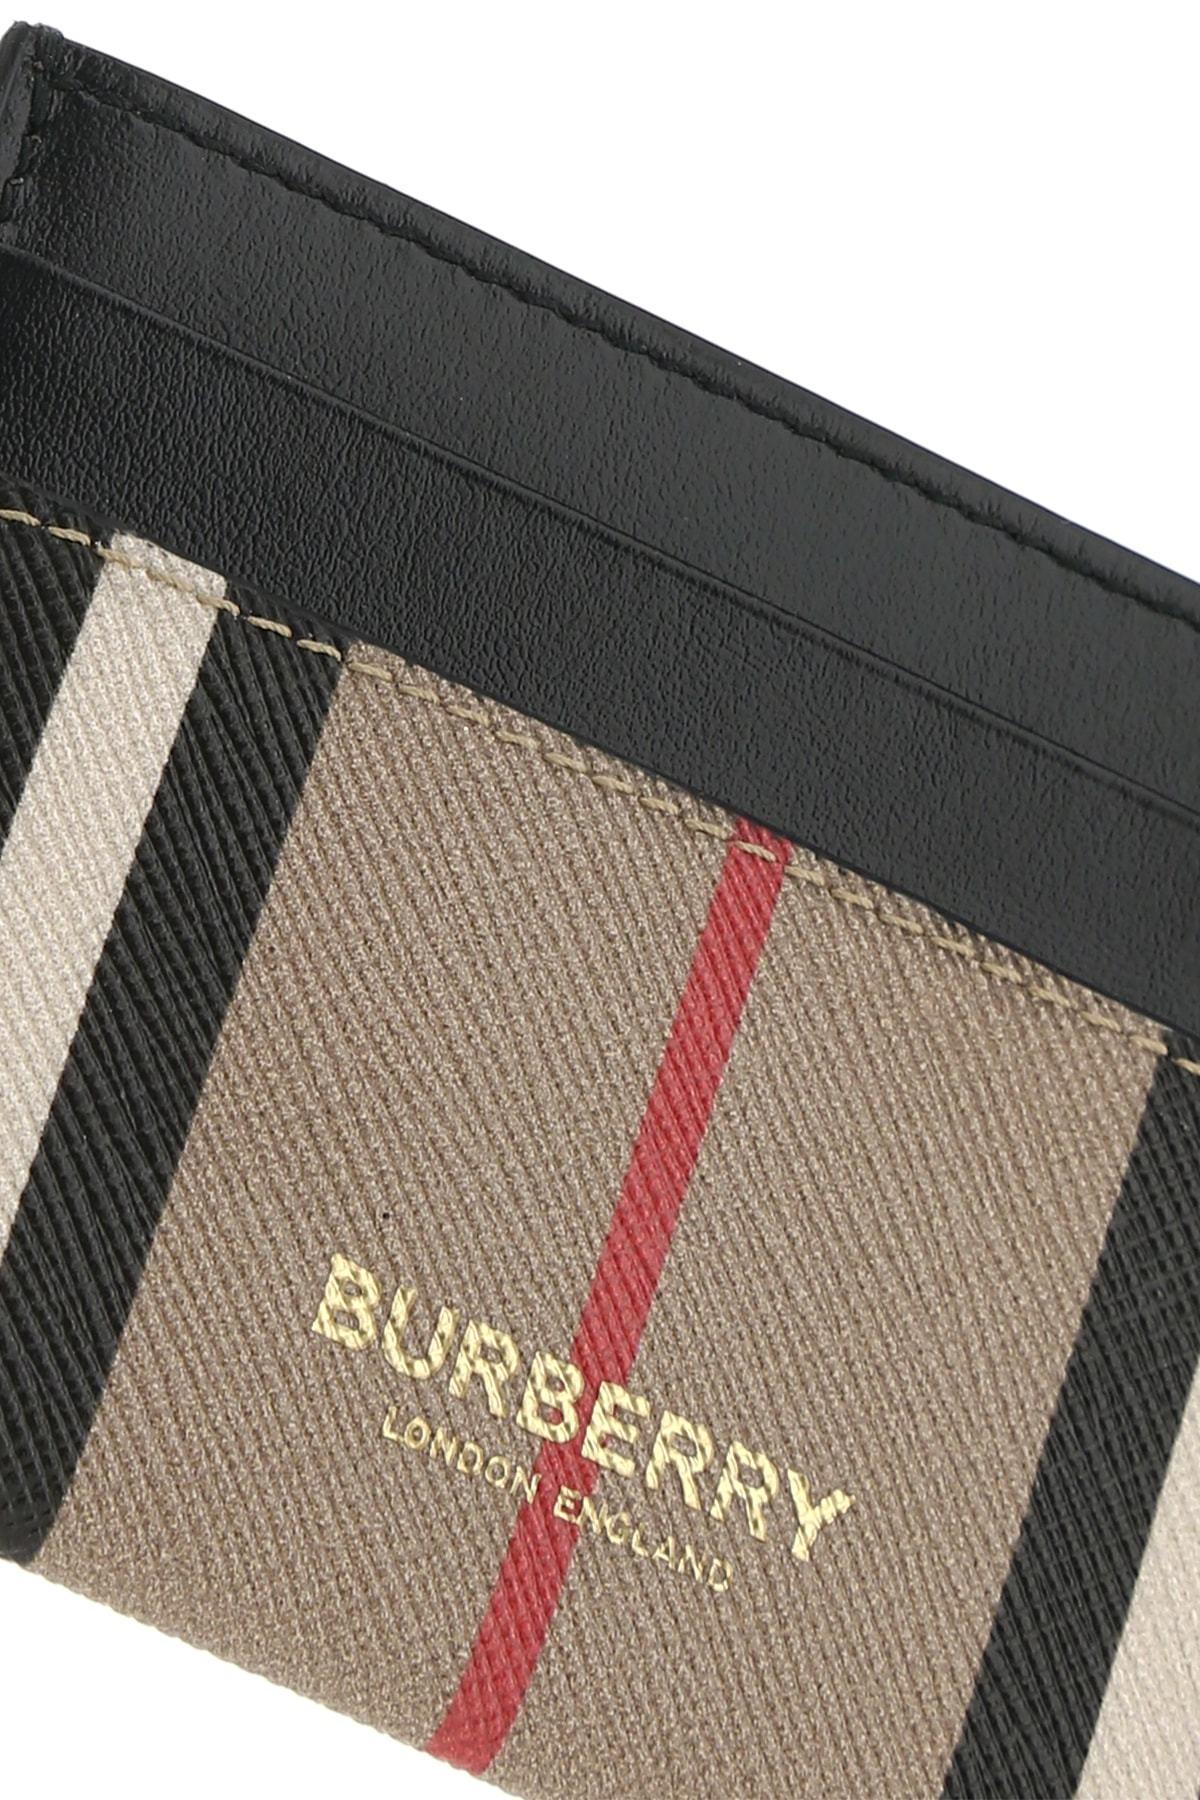 Ls Sandon Clf Card Holder - Burberry - Beige/Black - Thermoplastic